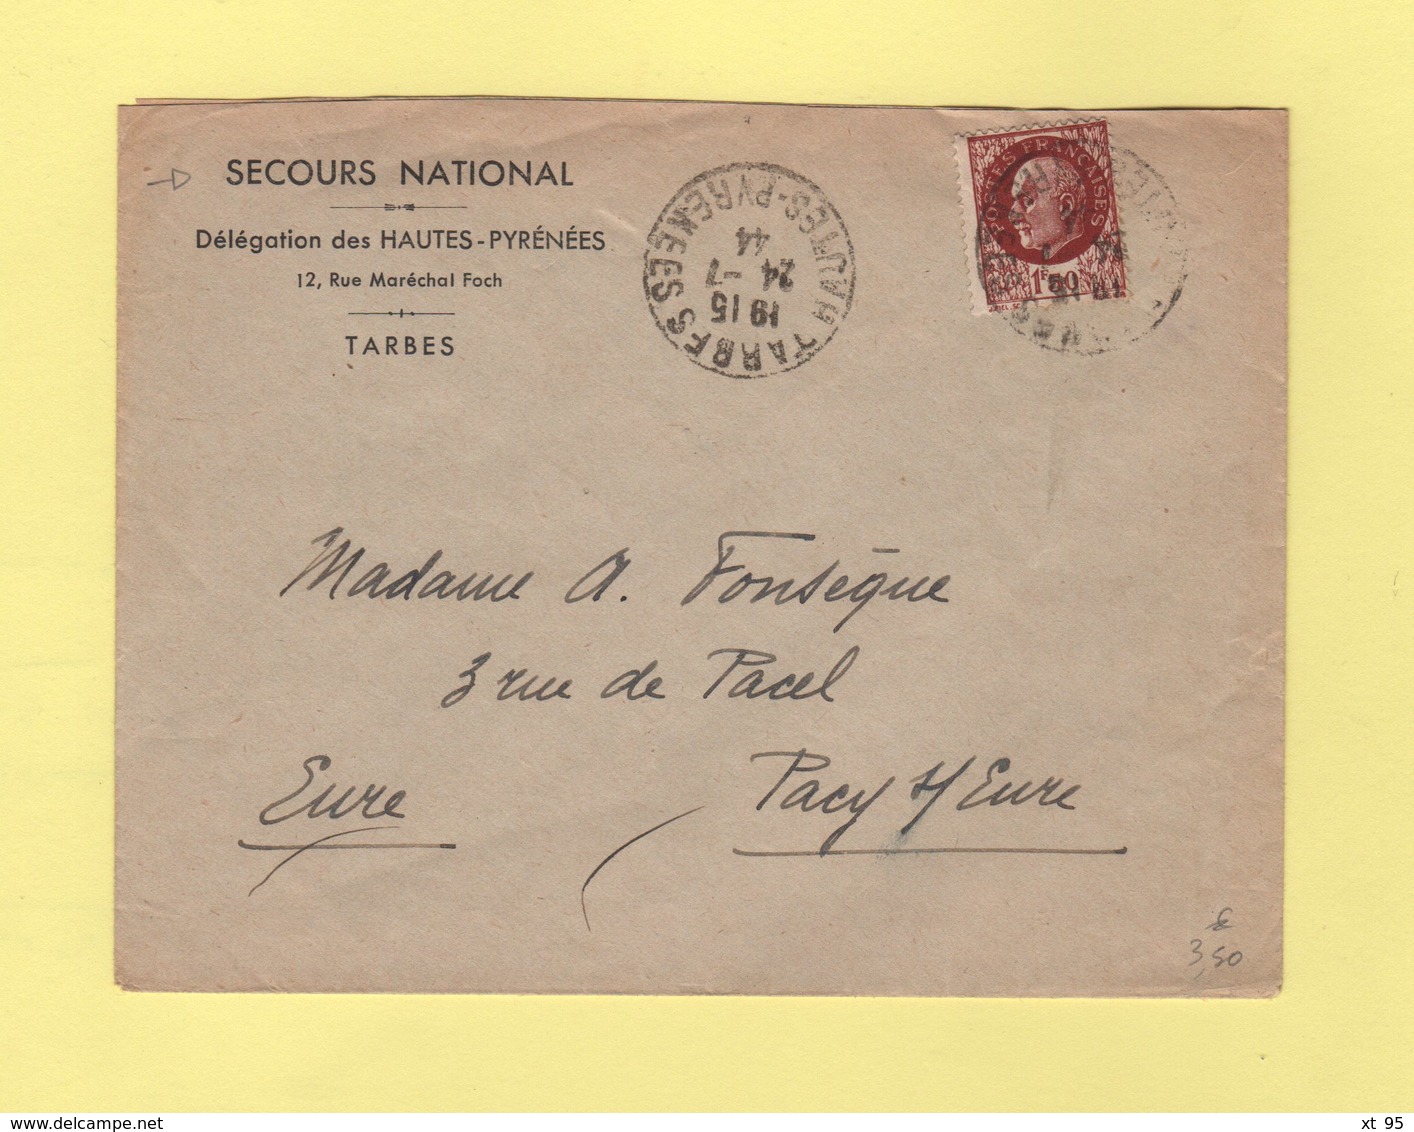 Tarbes - Hautes Pyrenees - Envelopep A En Tete Du Secours National - 24-7-1944 - WW II